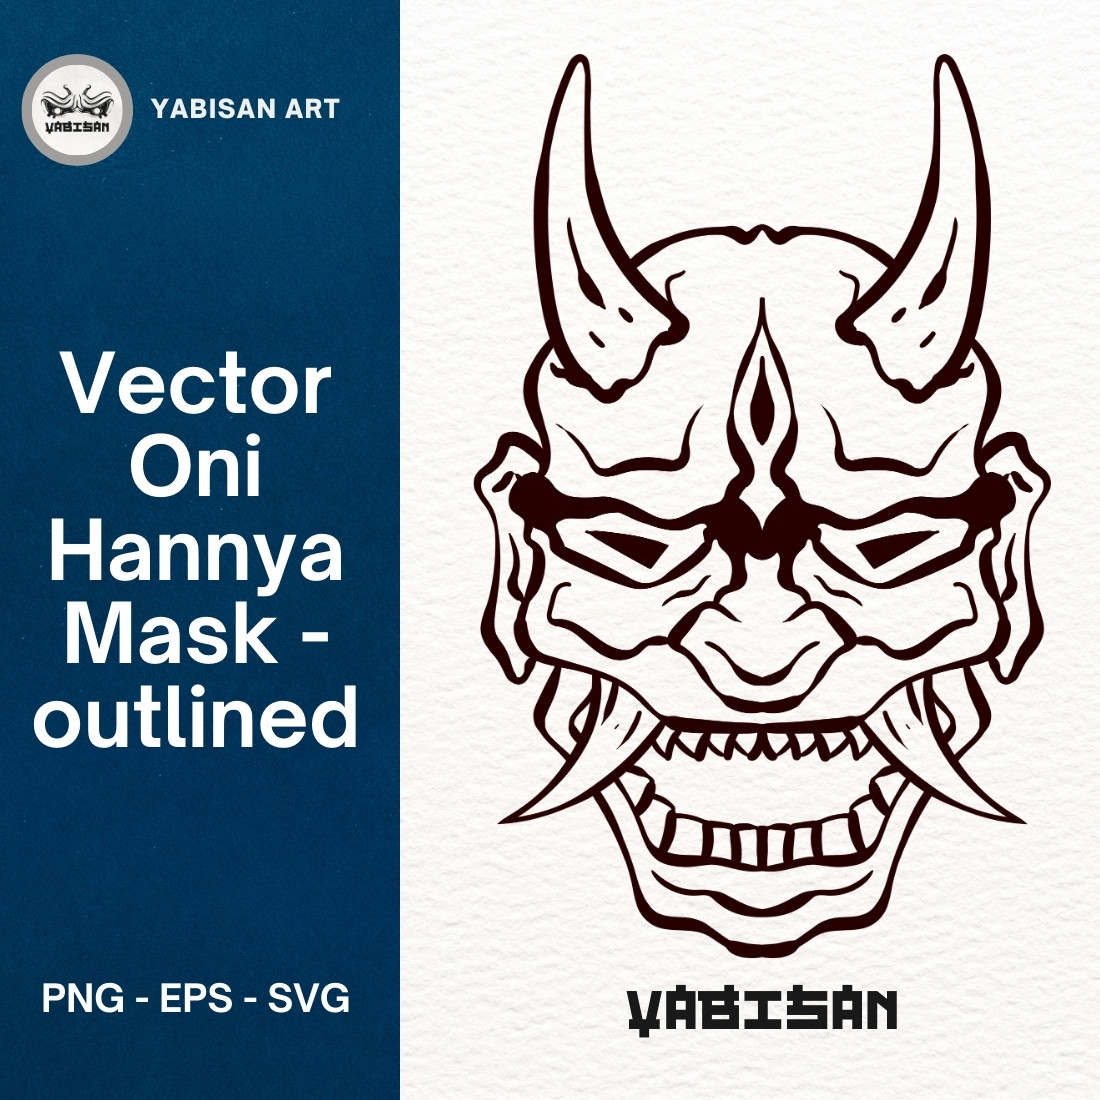 Oni Hannya Mask Art 5 – Outlined cover image.